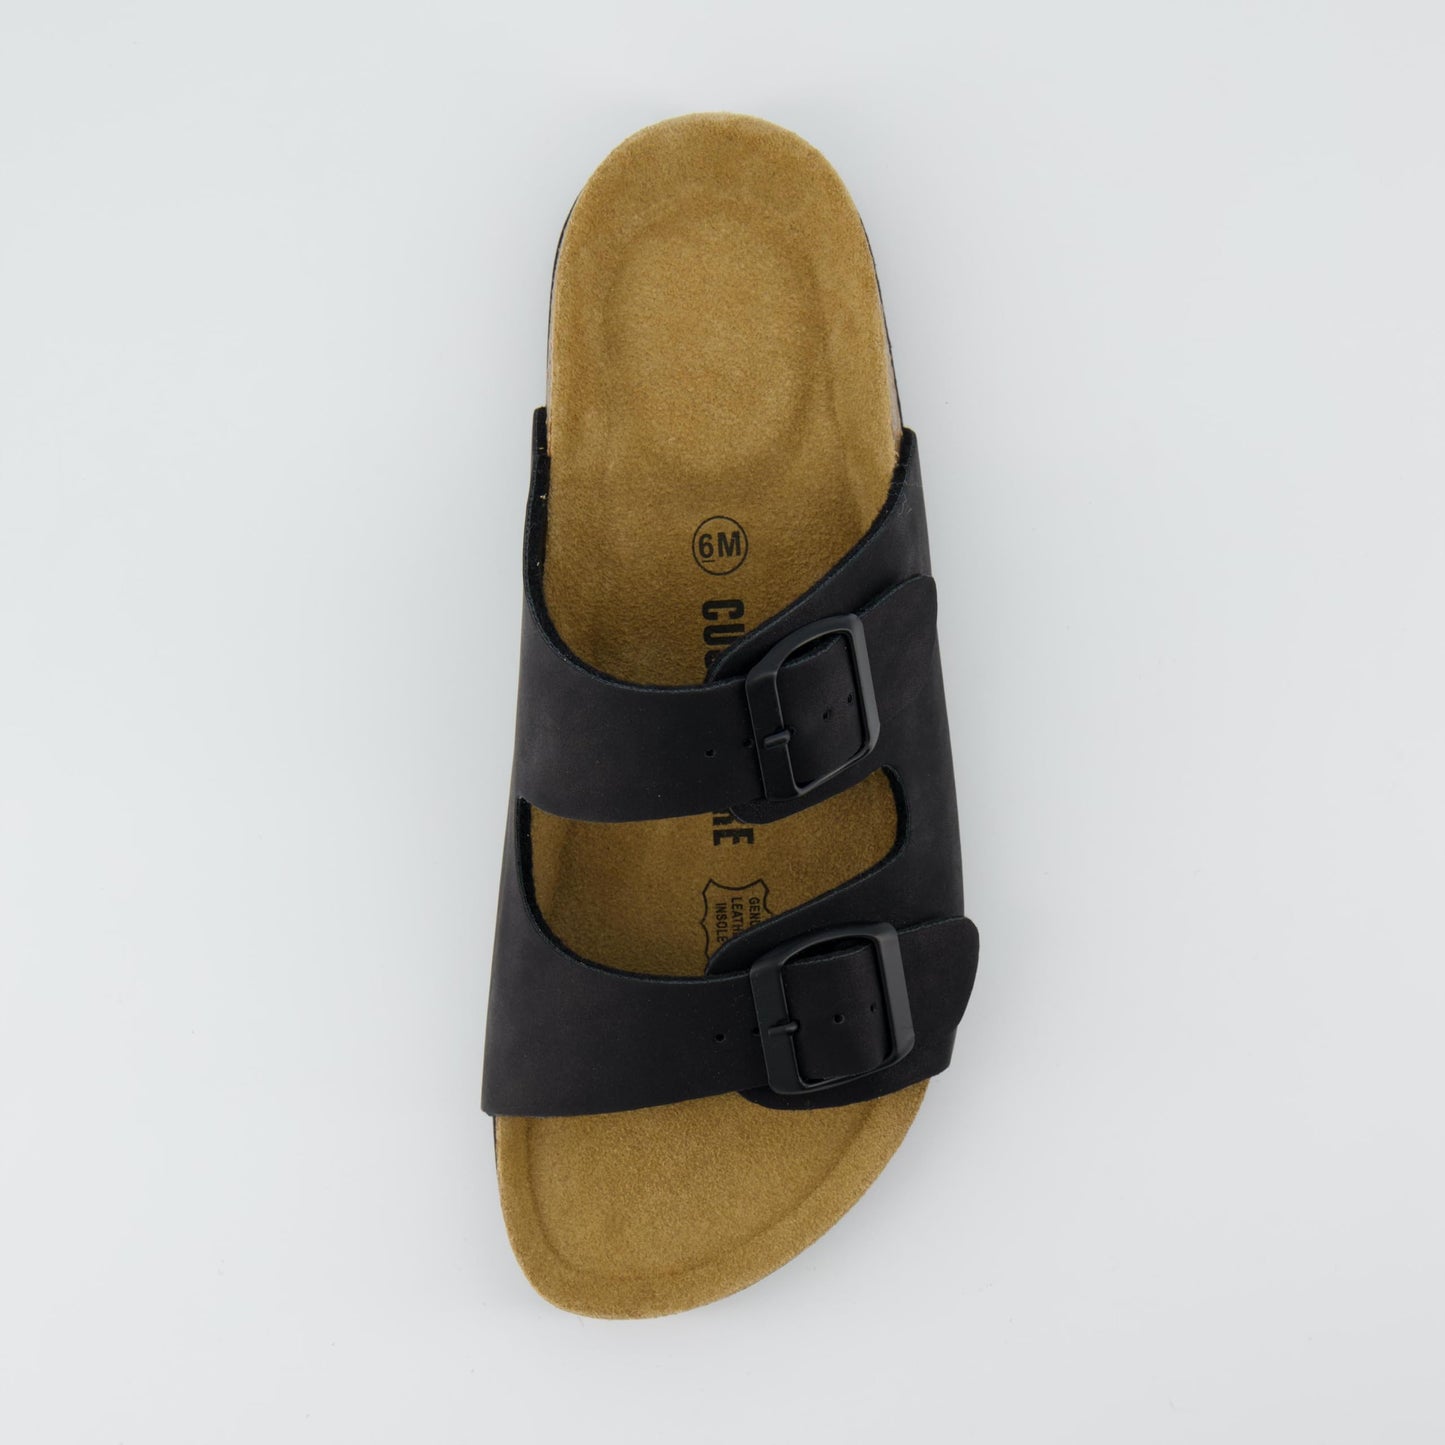 CUSHIONAIRE Women's Lane Cork Footbed Sandal With +Comfort, Black, 8.5